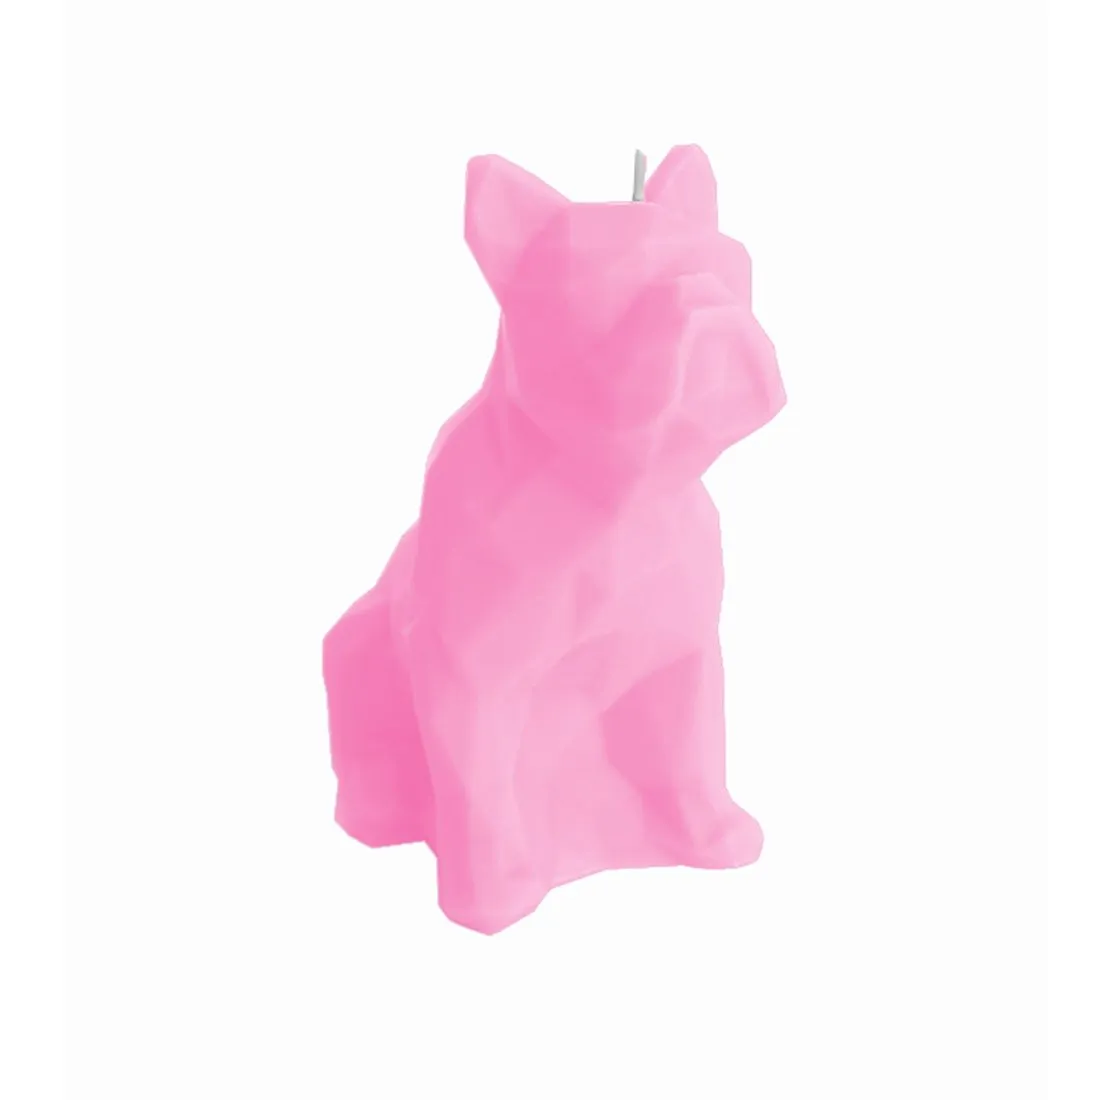 Dekorative Kerze Tier als Polyeder - Bulldogge rosa